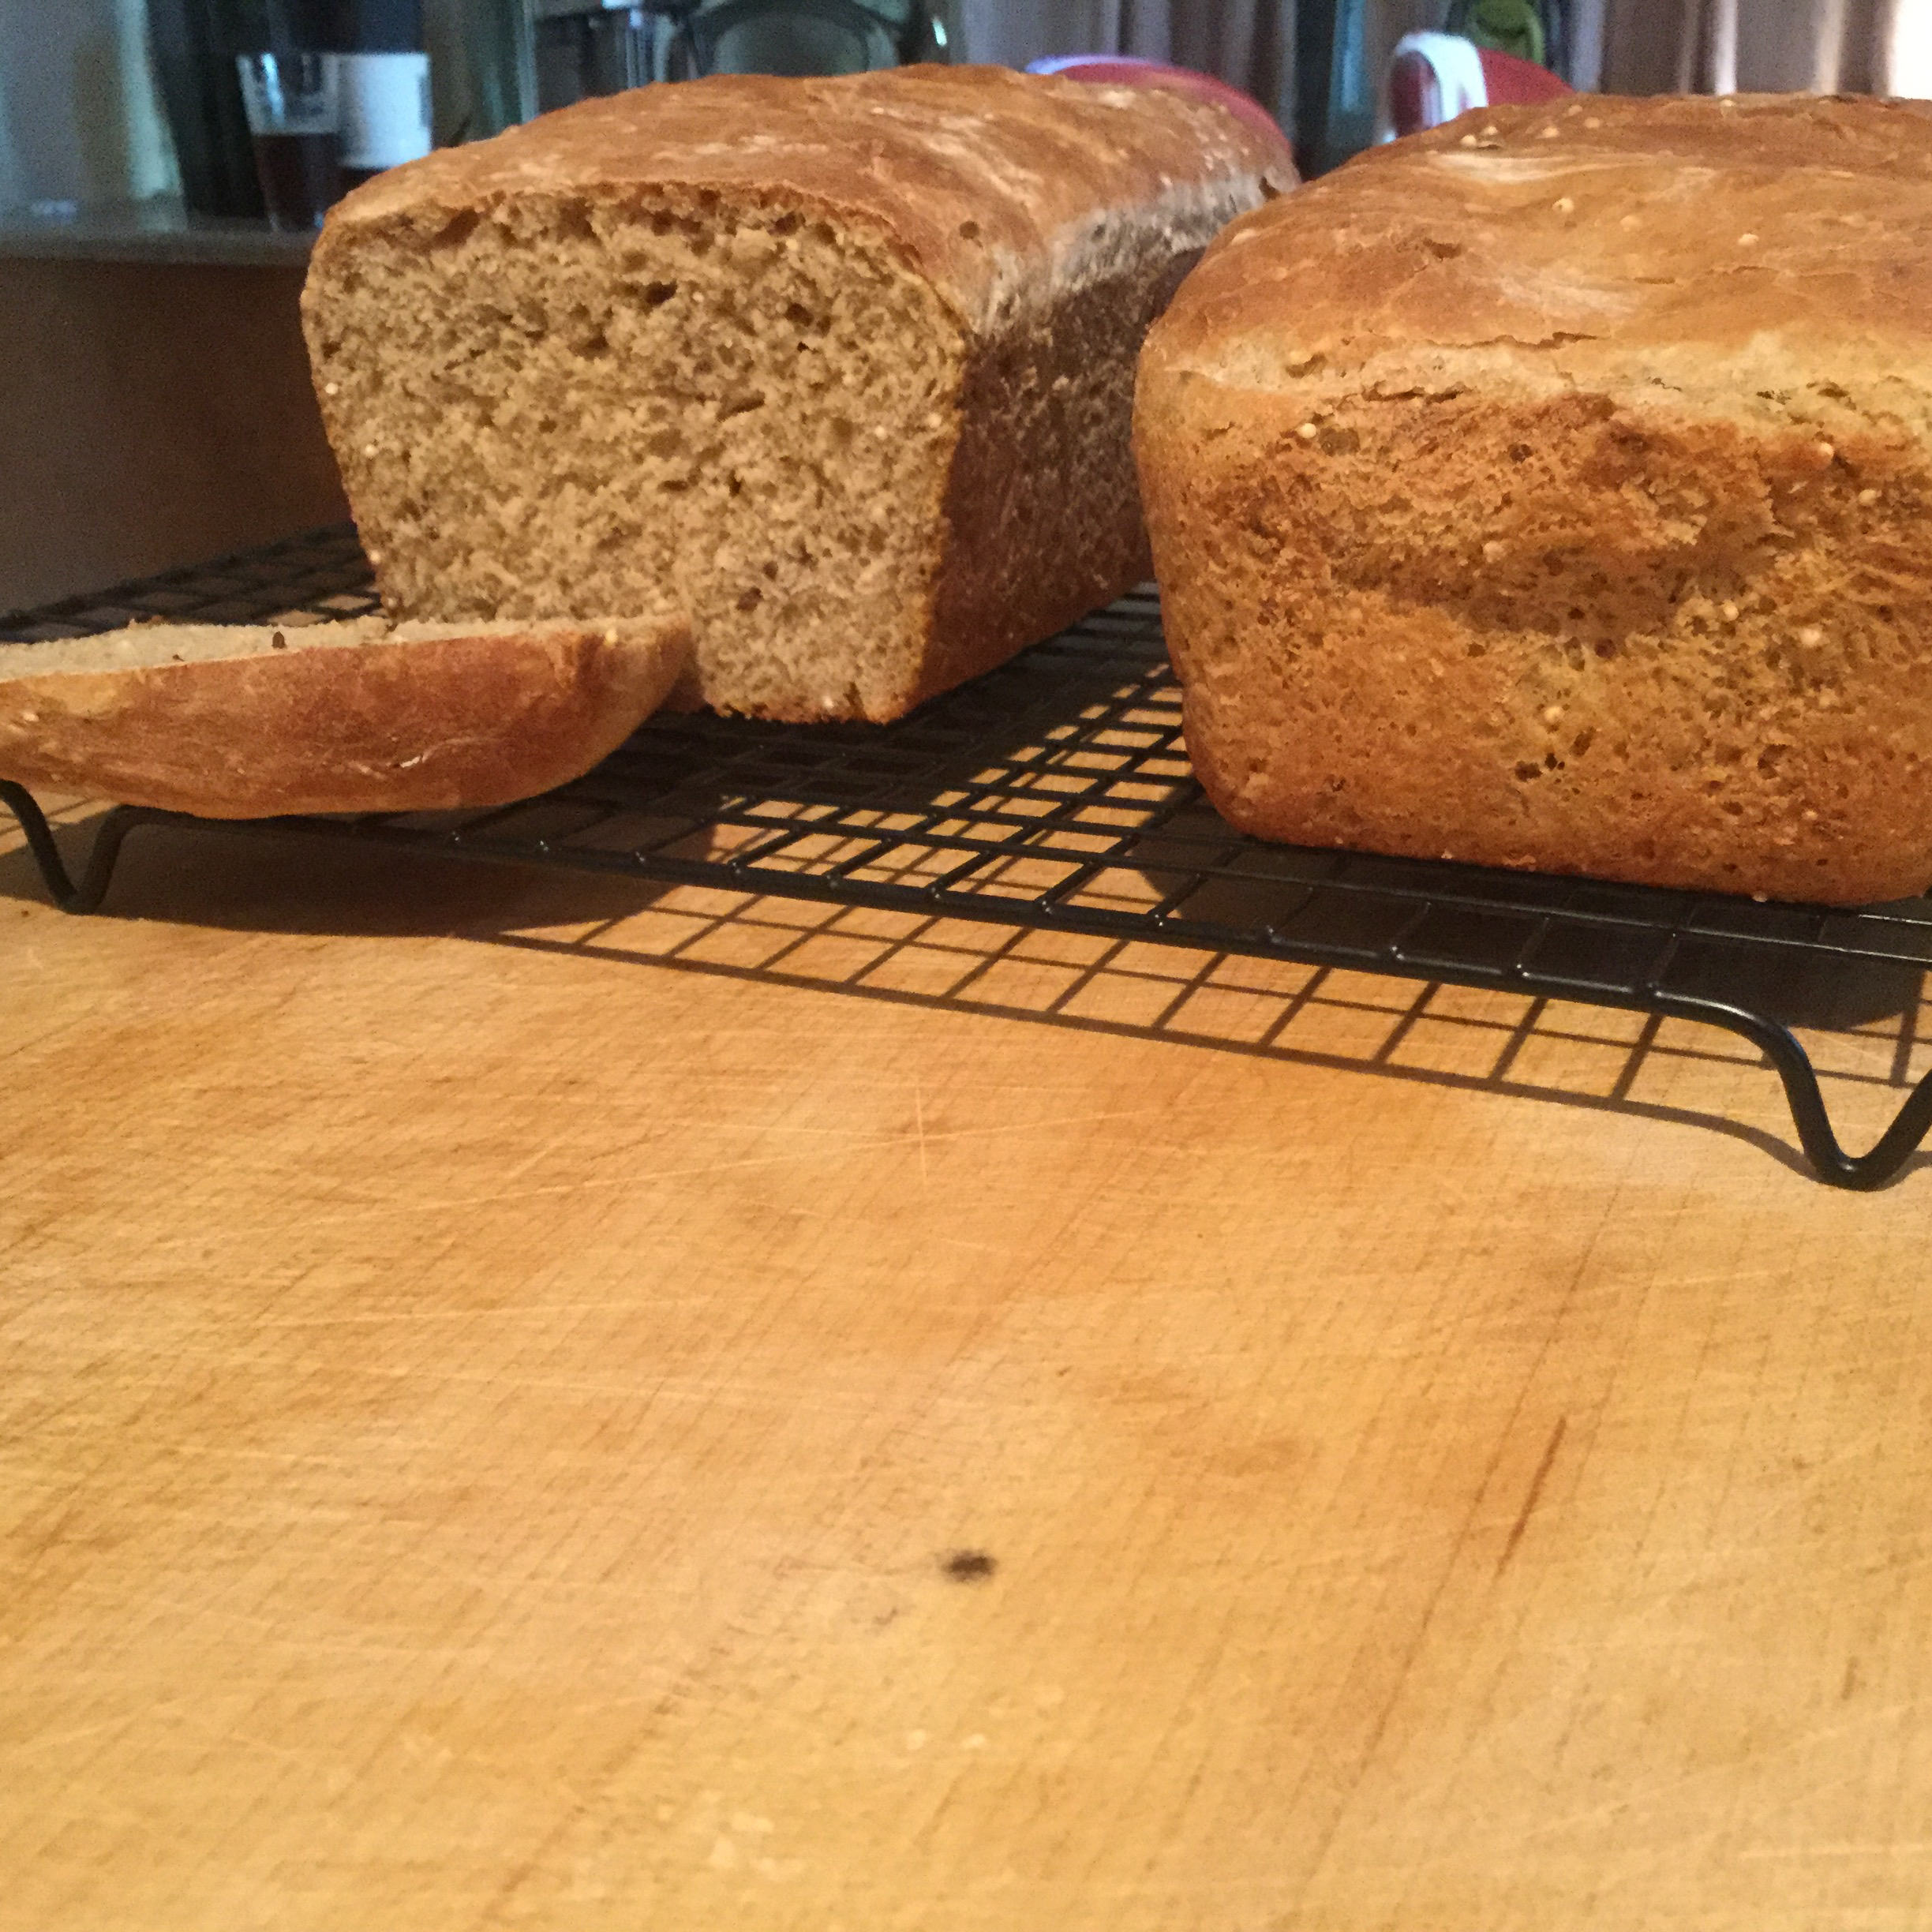 Cracked Wheat Bread II GFG